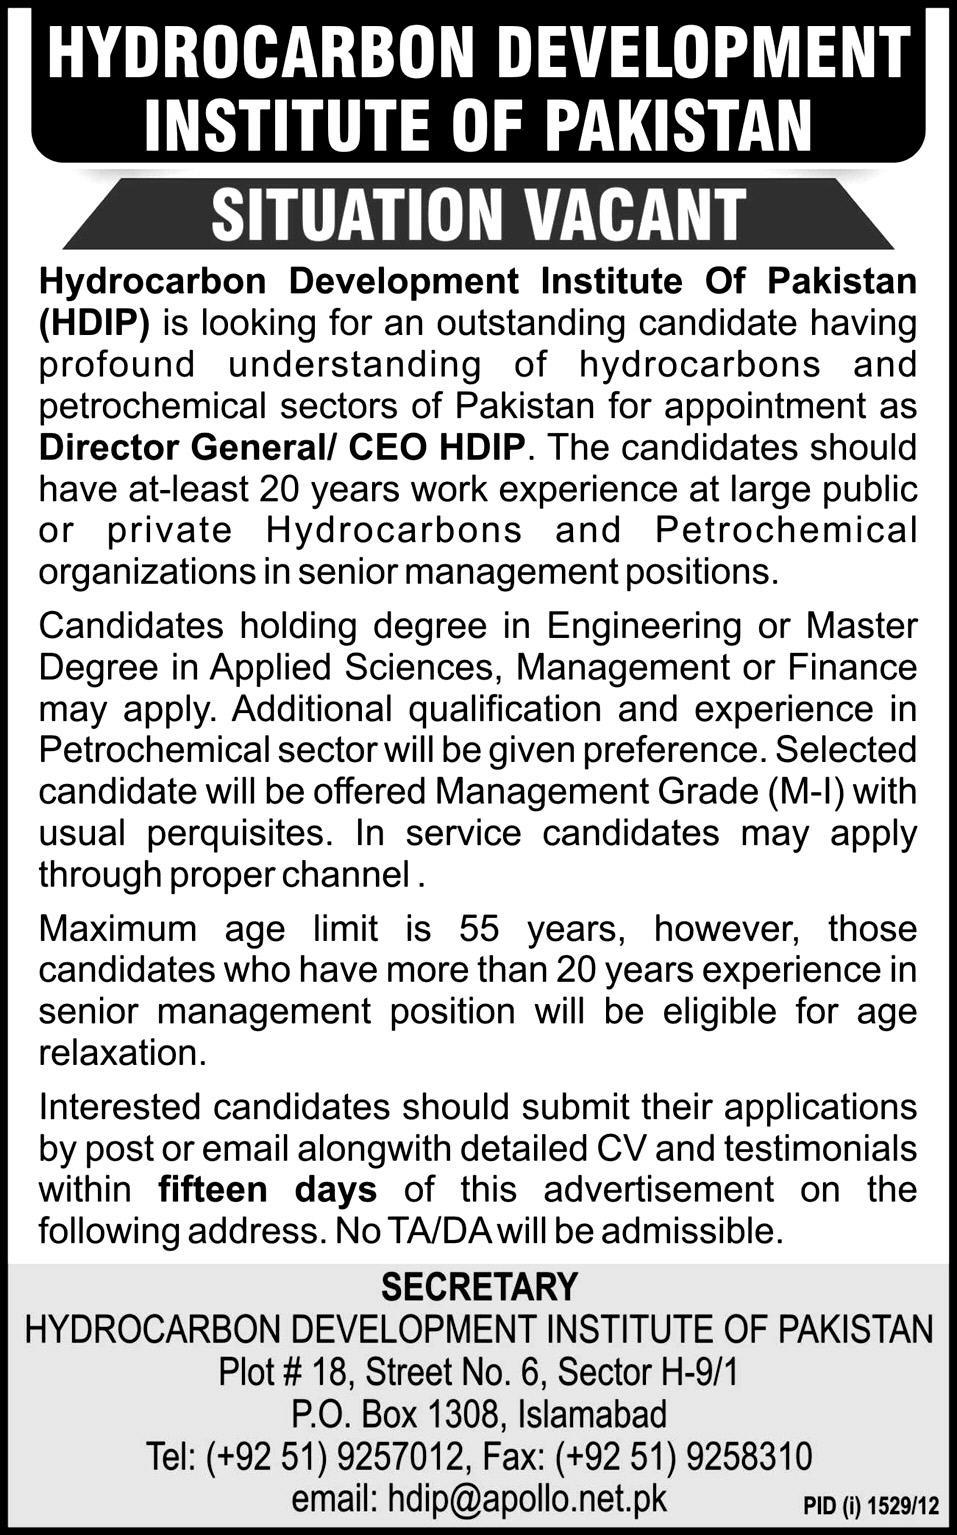 Hydrocarbon Development Institute of Pakistan (HDIP) Requires Director General